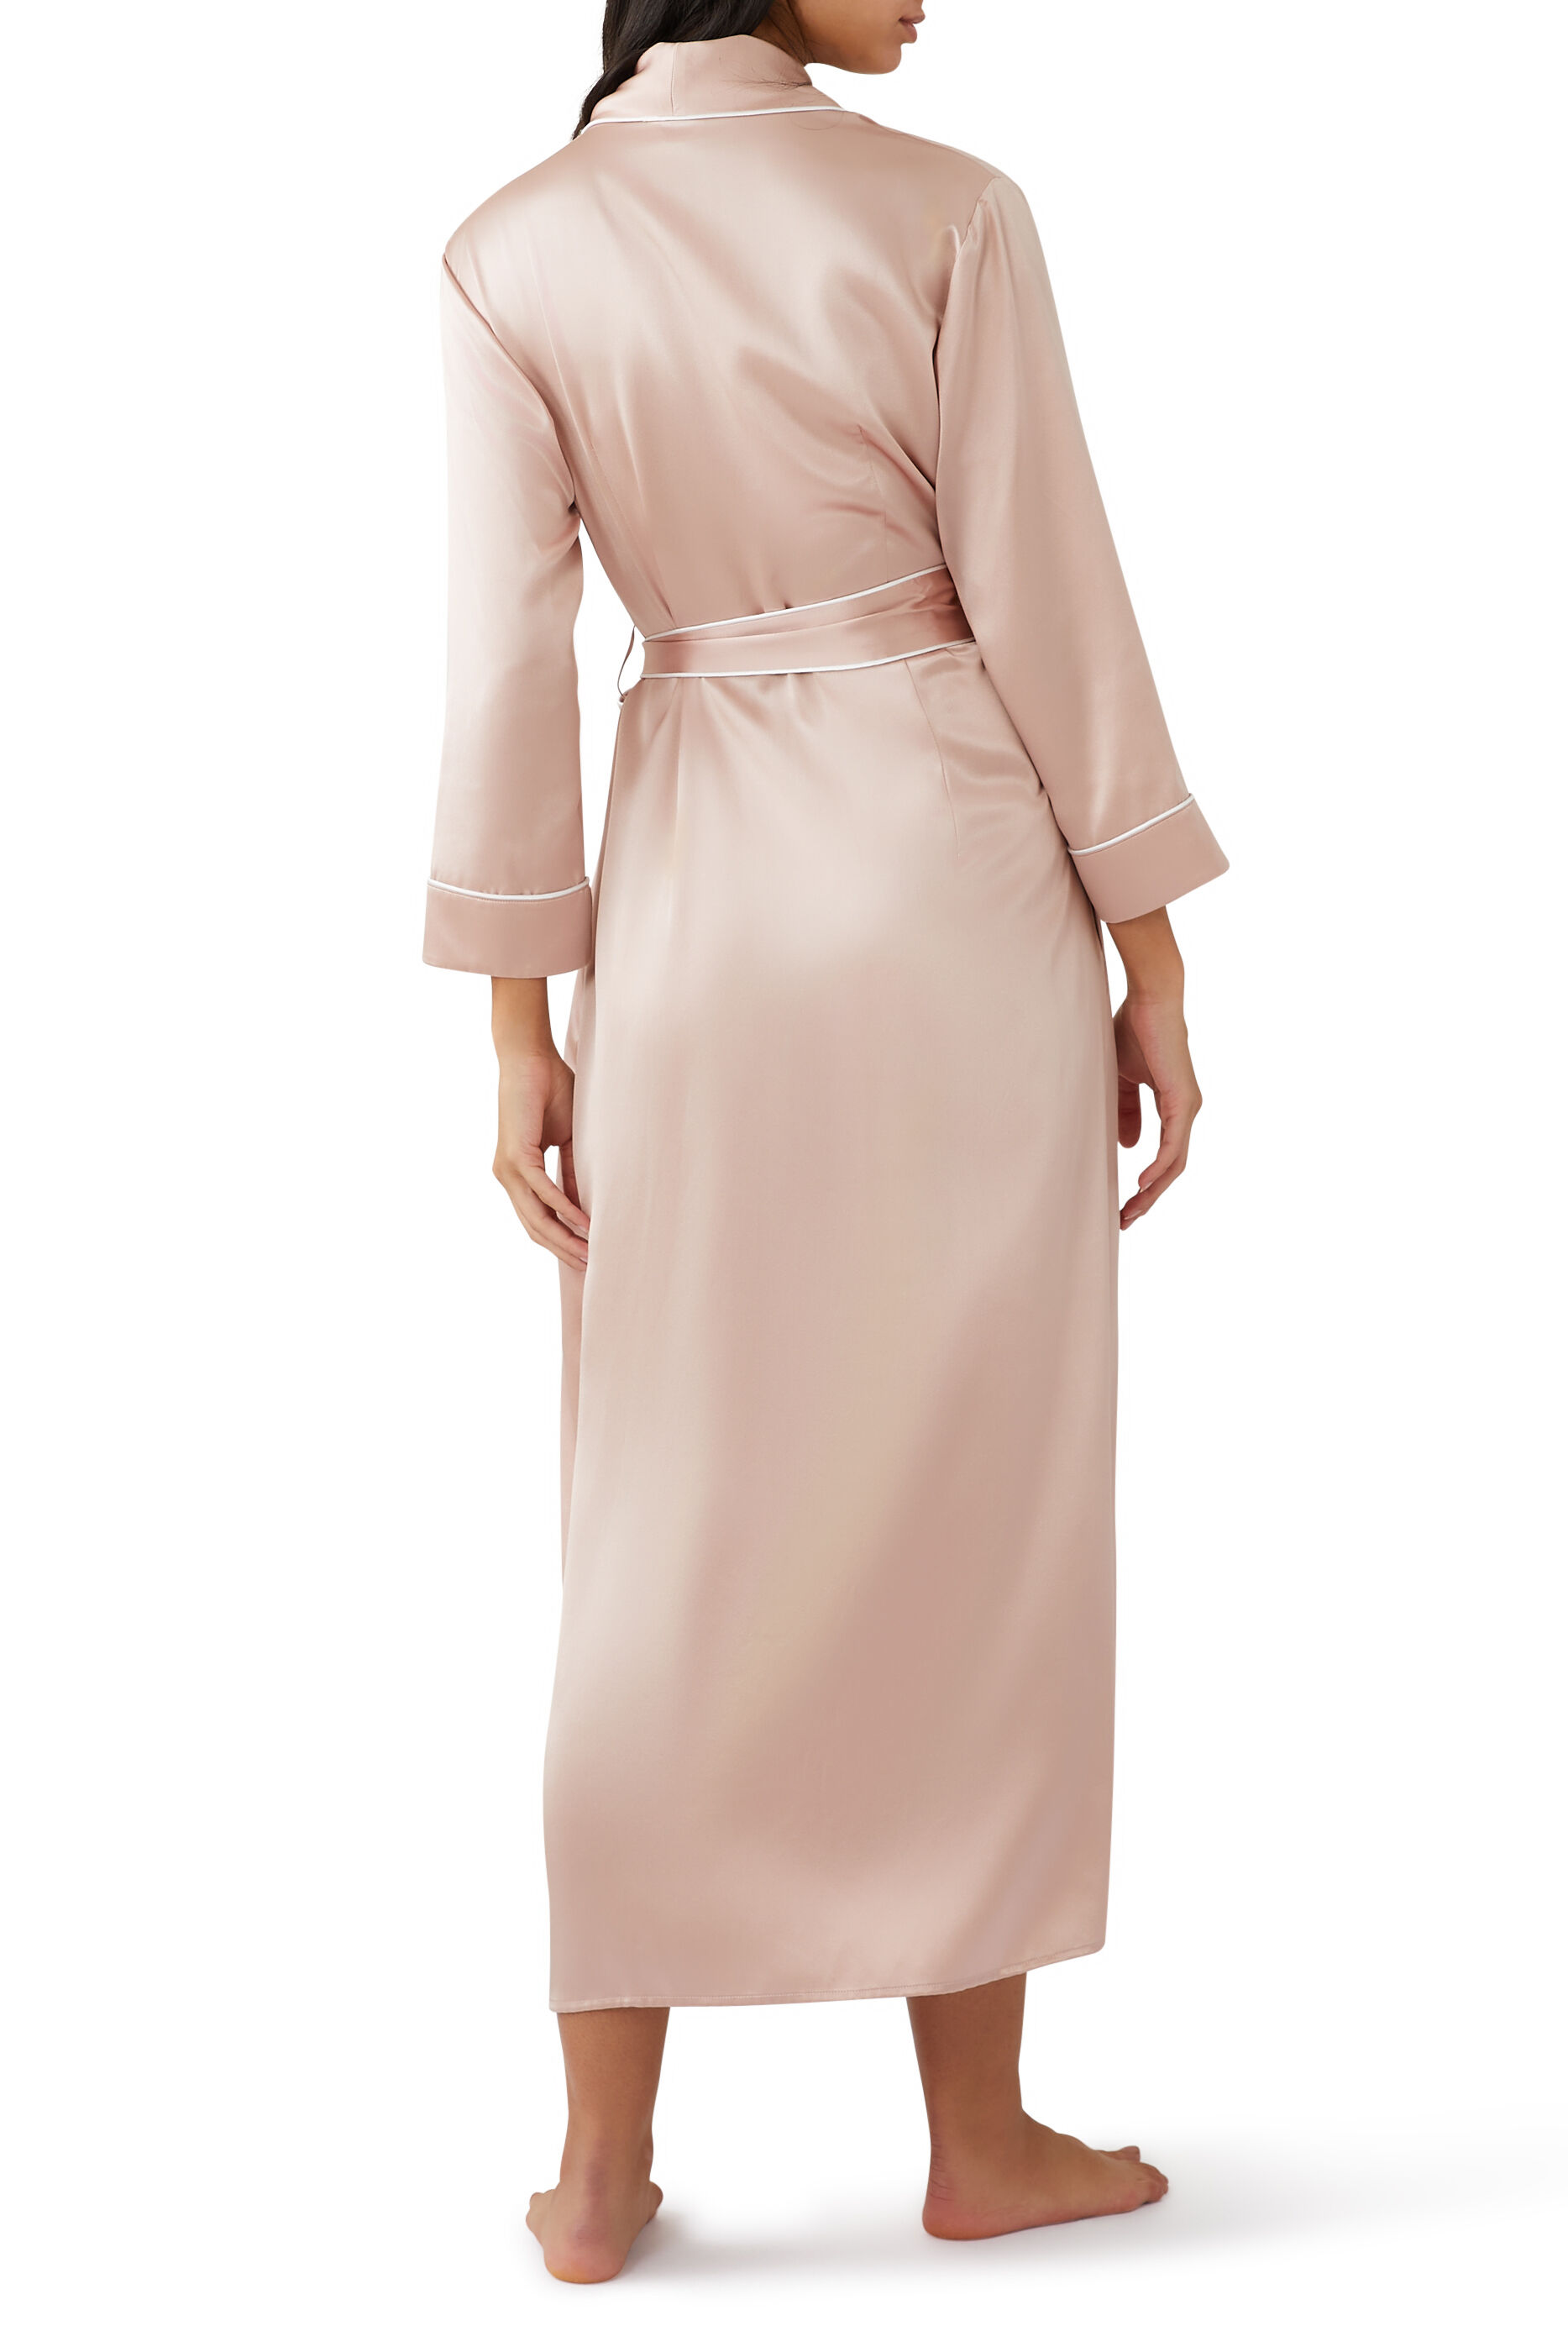 Womens Clothing Nightwear and sleepwear Robes Olivia Von Halle Silk Astrid Robe in Pink robe dresses and bathrobes 